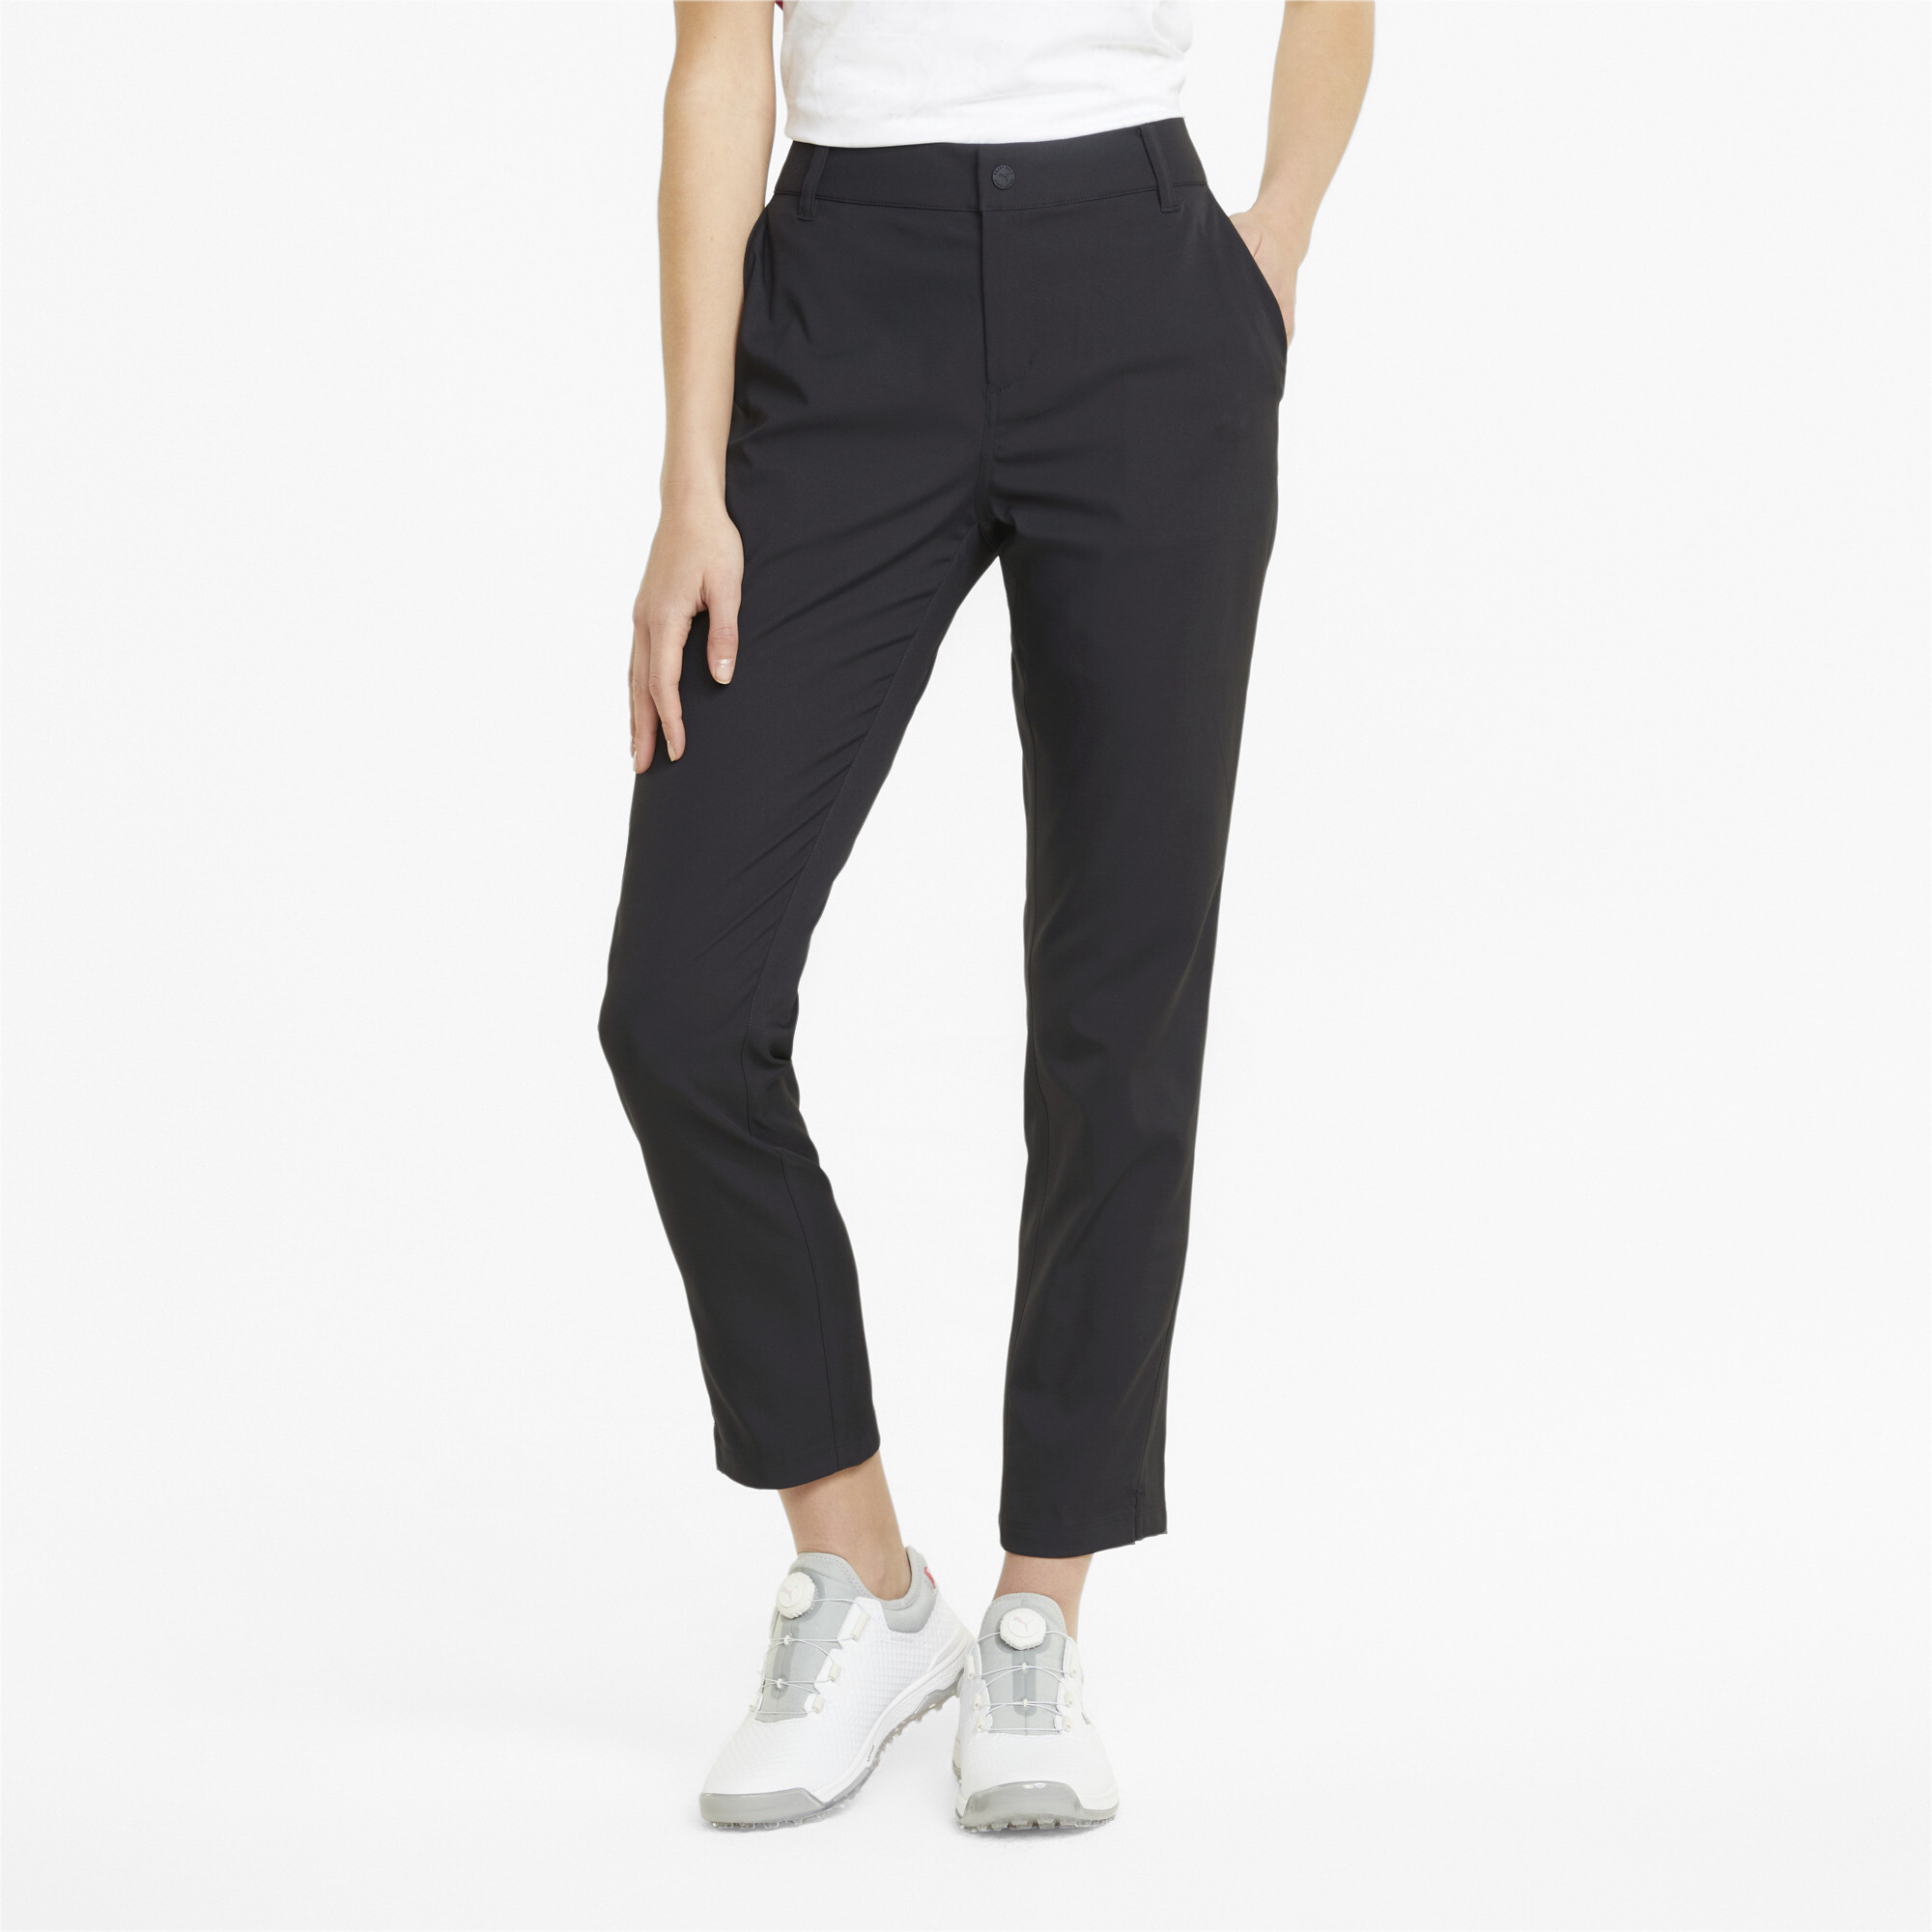 Women's Puma W Boardwalk Golf Pants, Black, Size M, Clothing